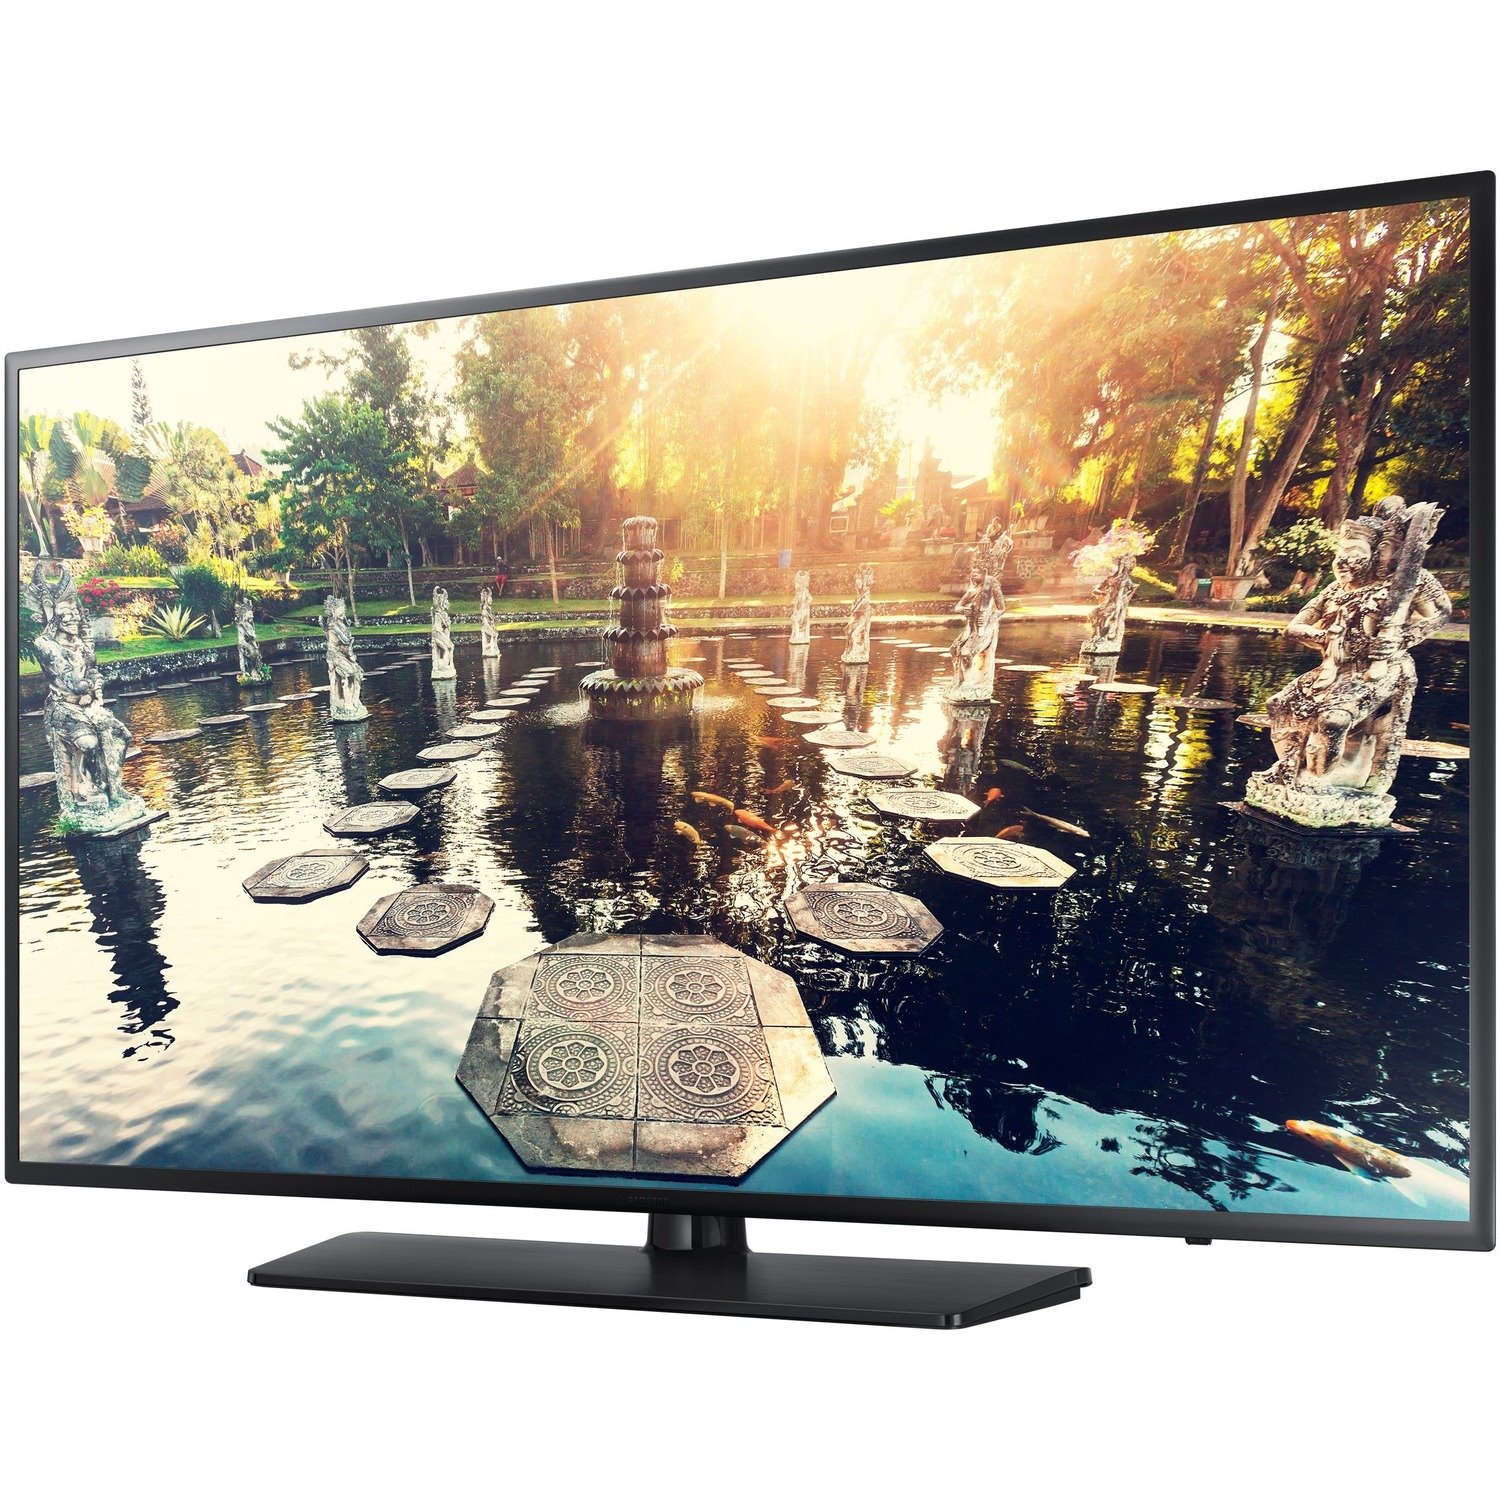 Samsung 690 HG32AE690DW 31.5" LED-LCD TV - HDTV